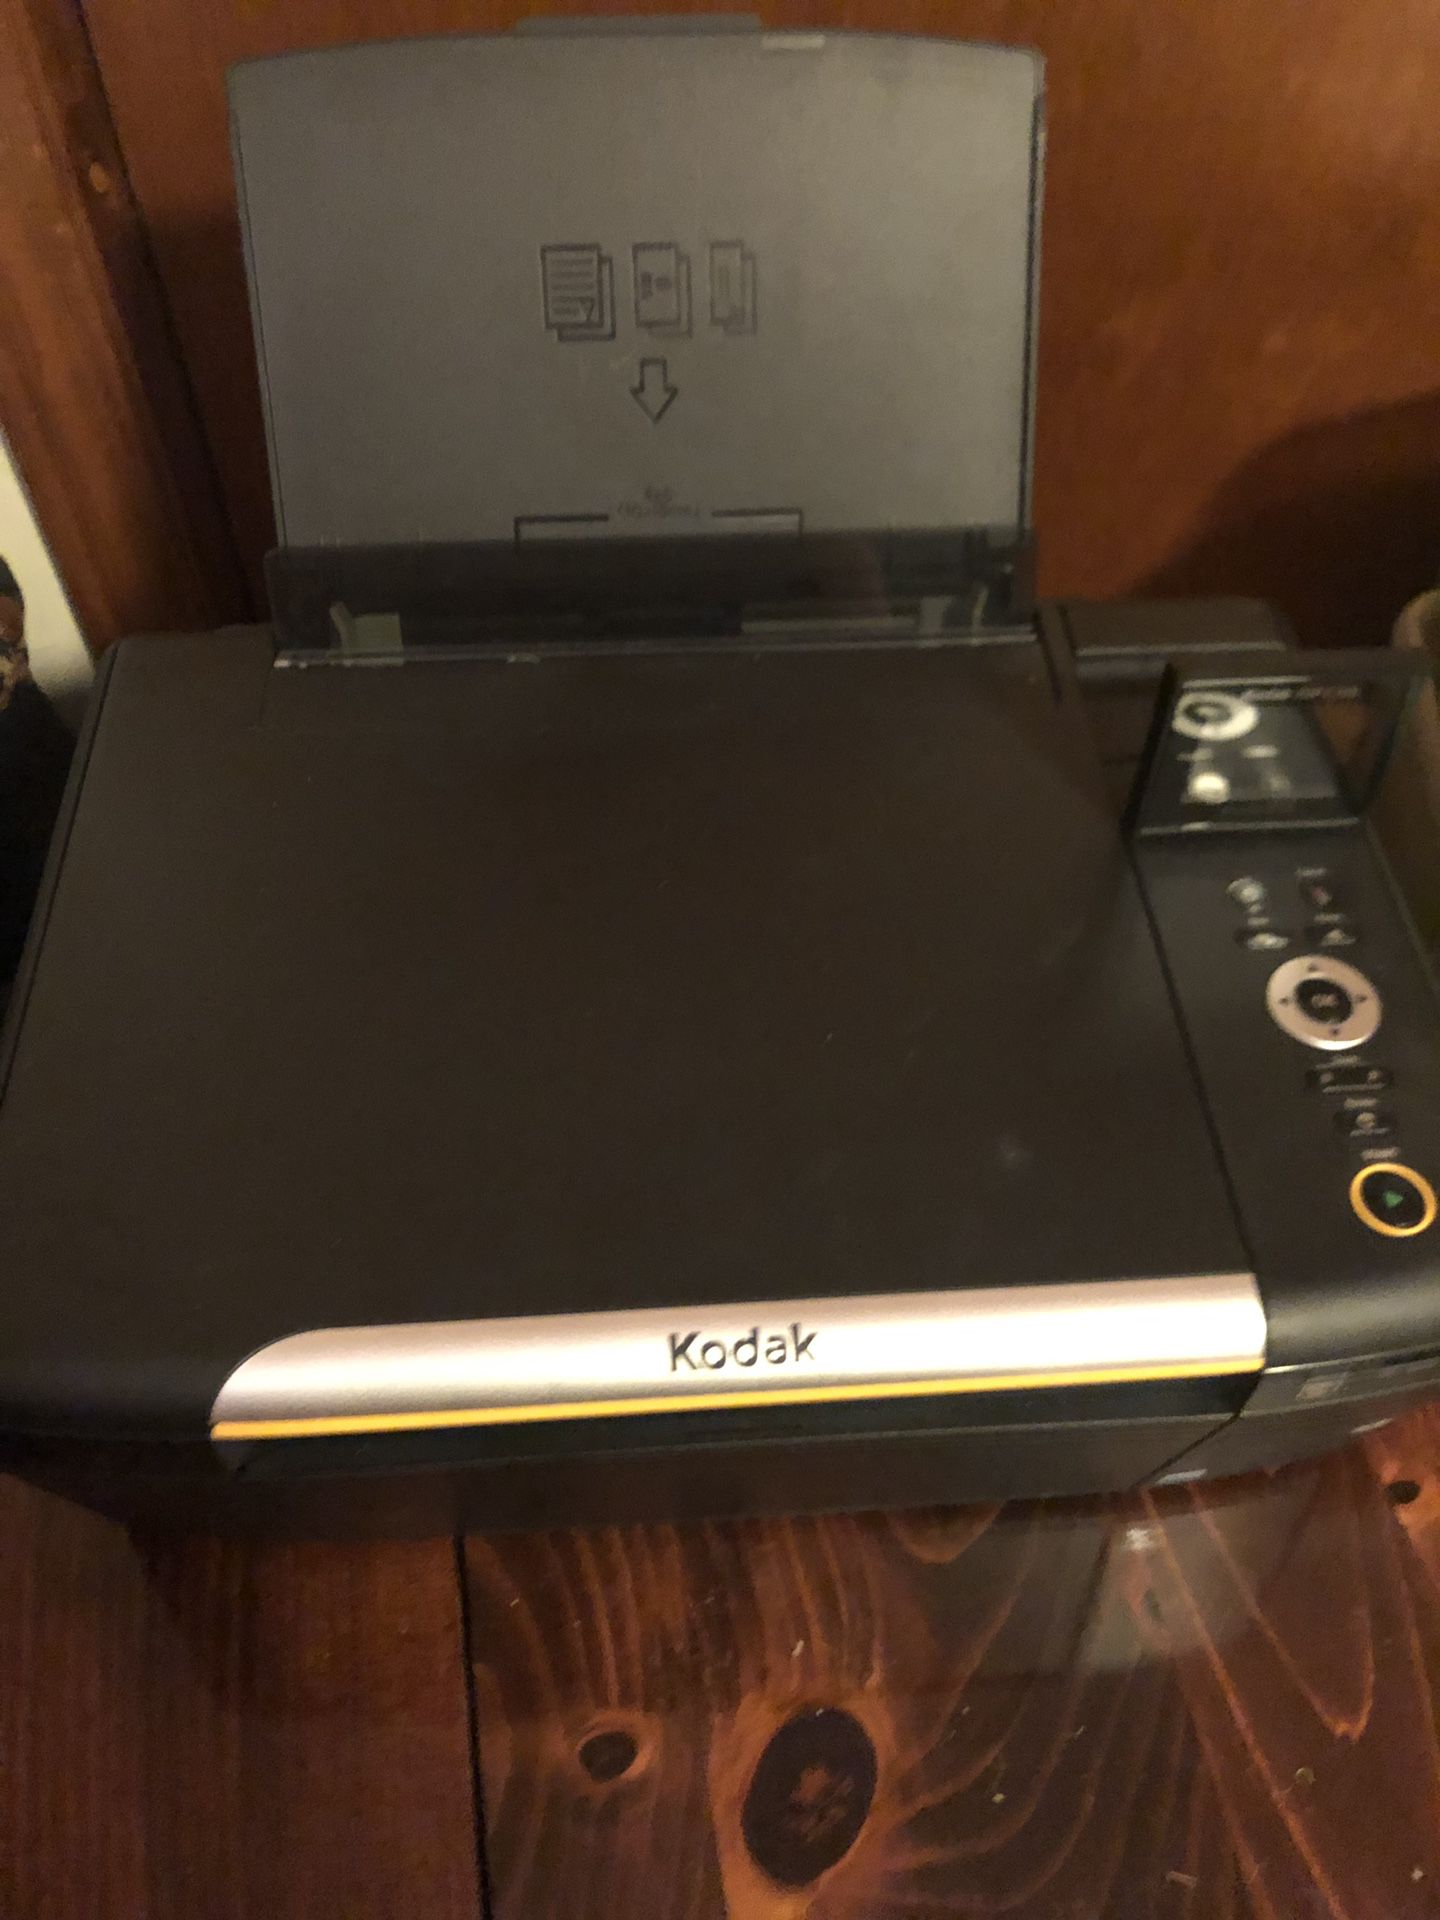 Kodak all in one printer